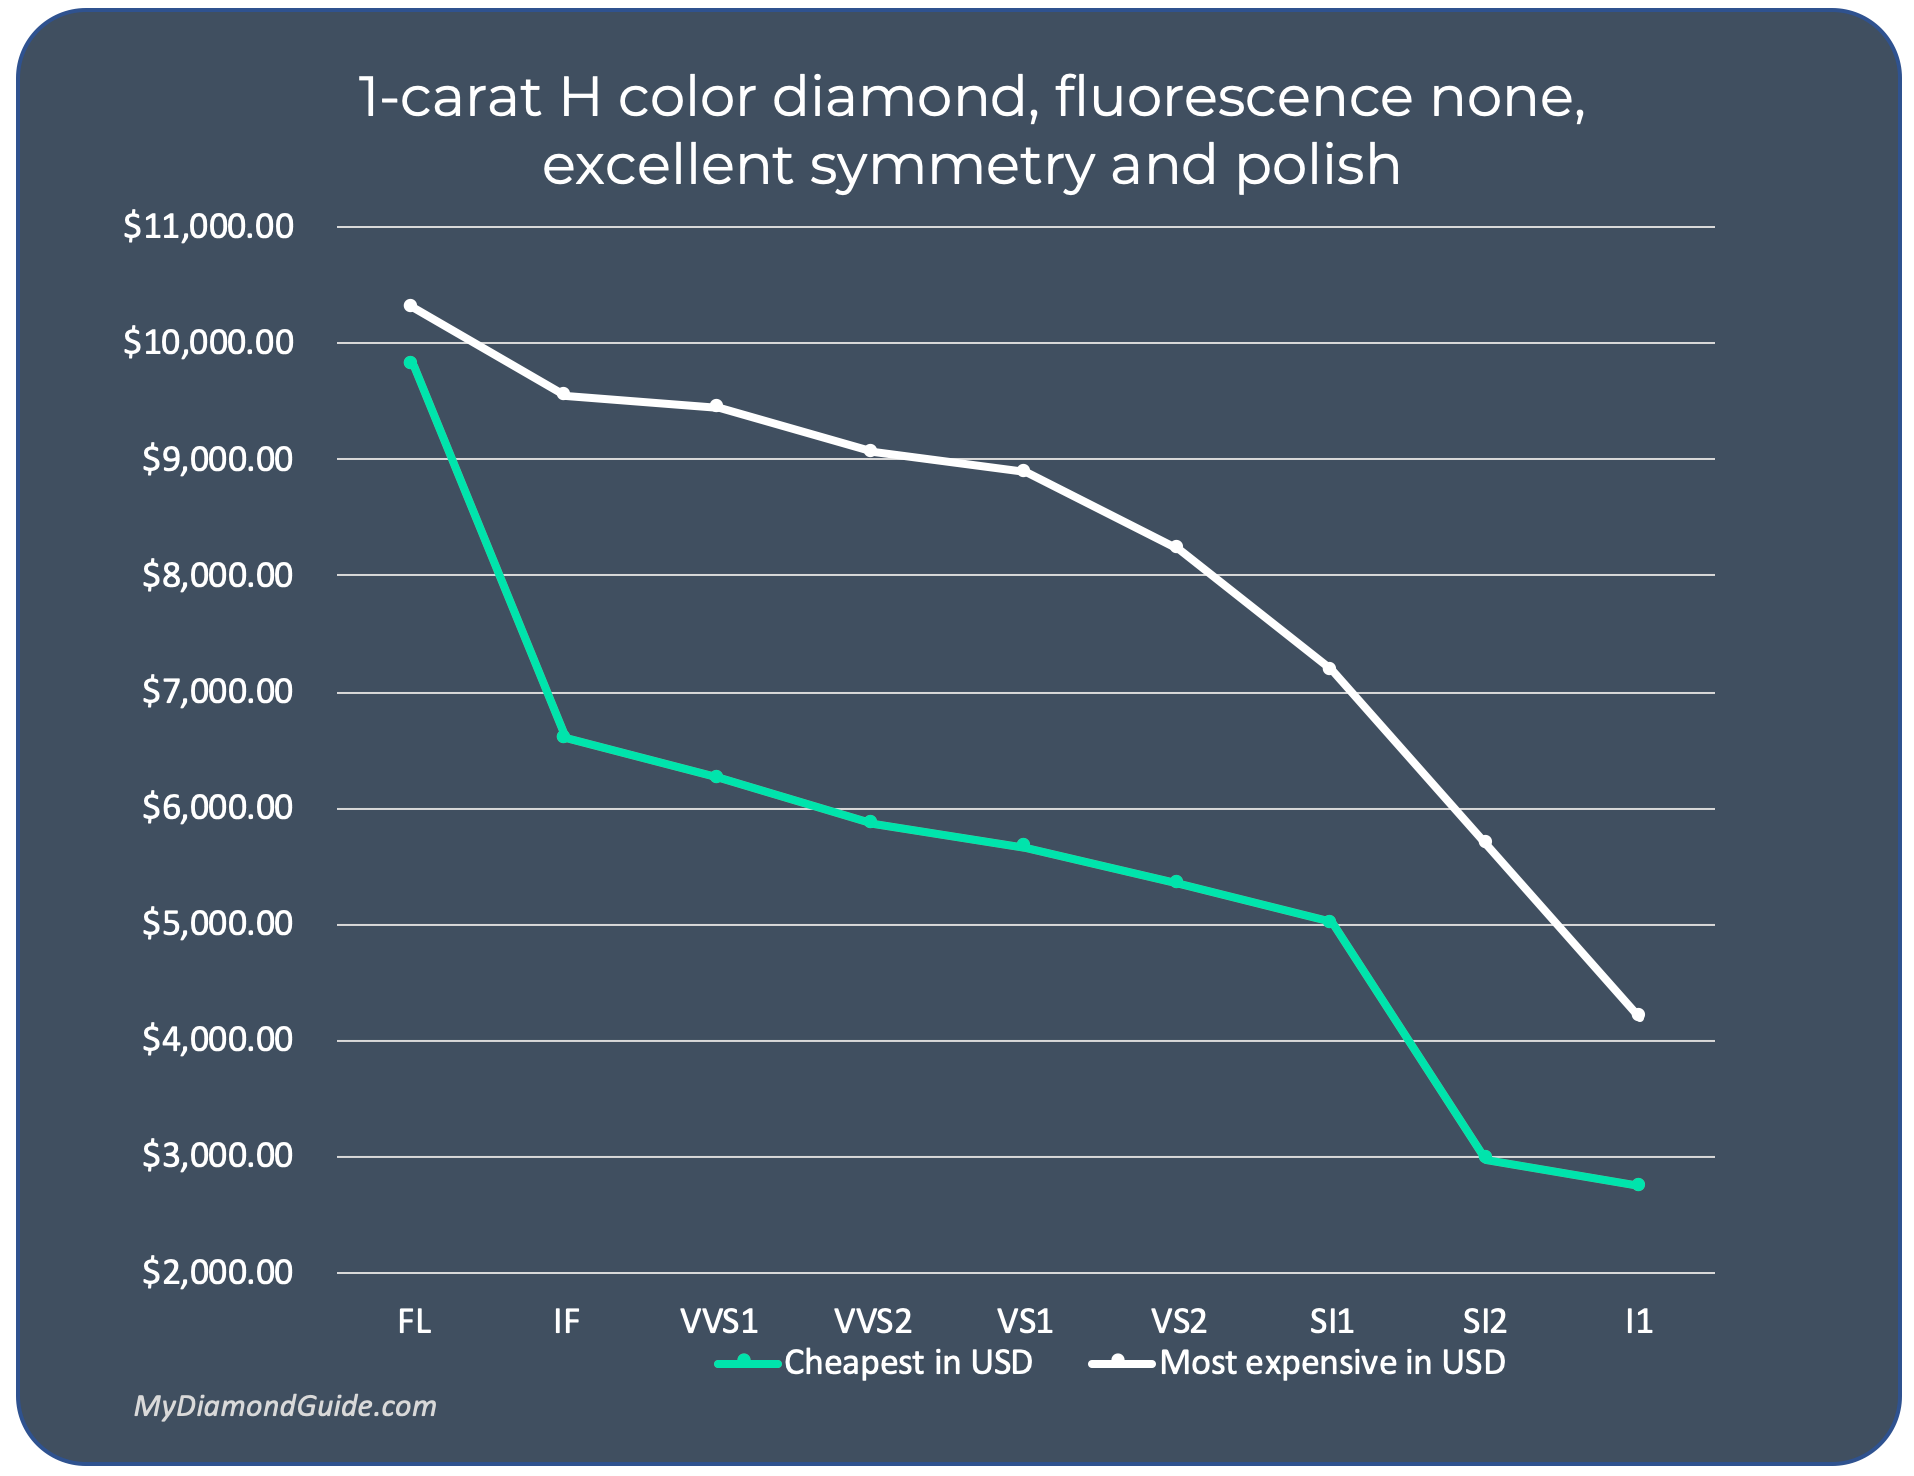 Diamond prices vary by clarity